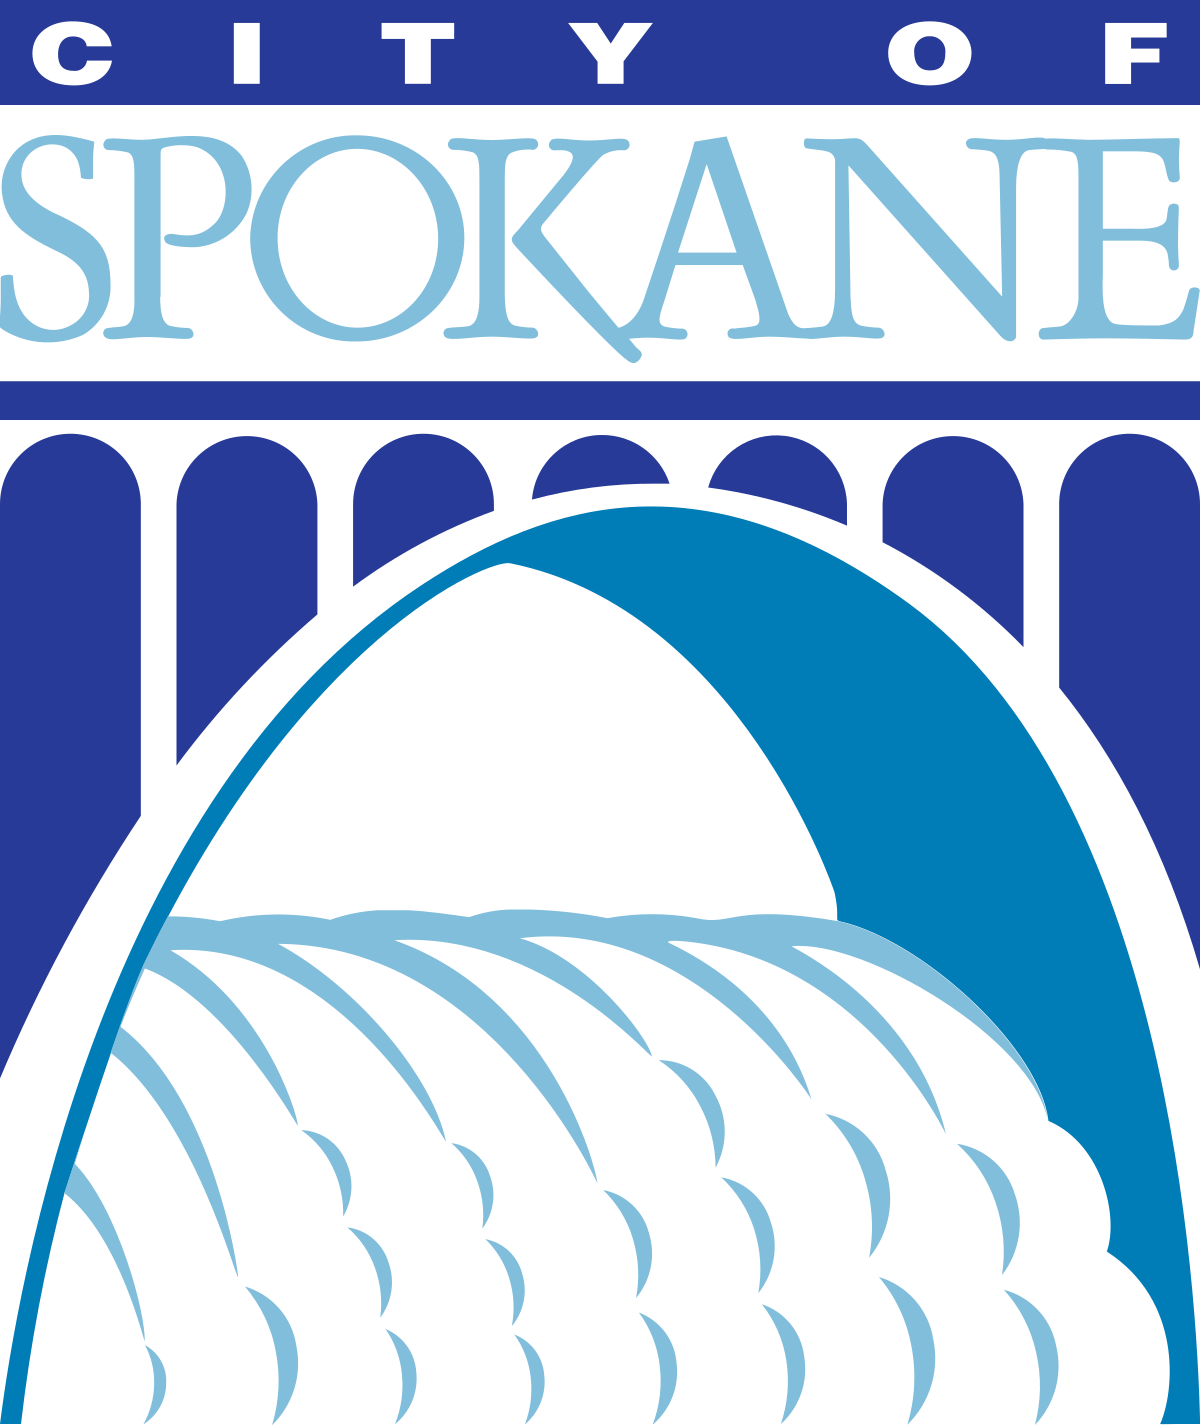 city of spokane logo